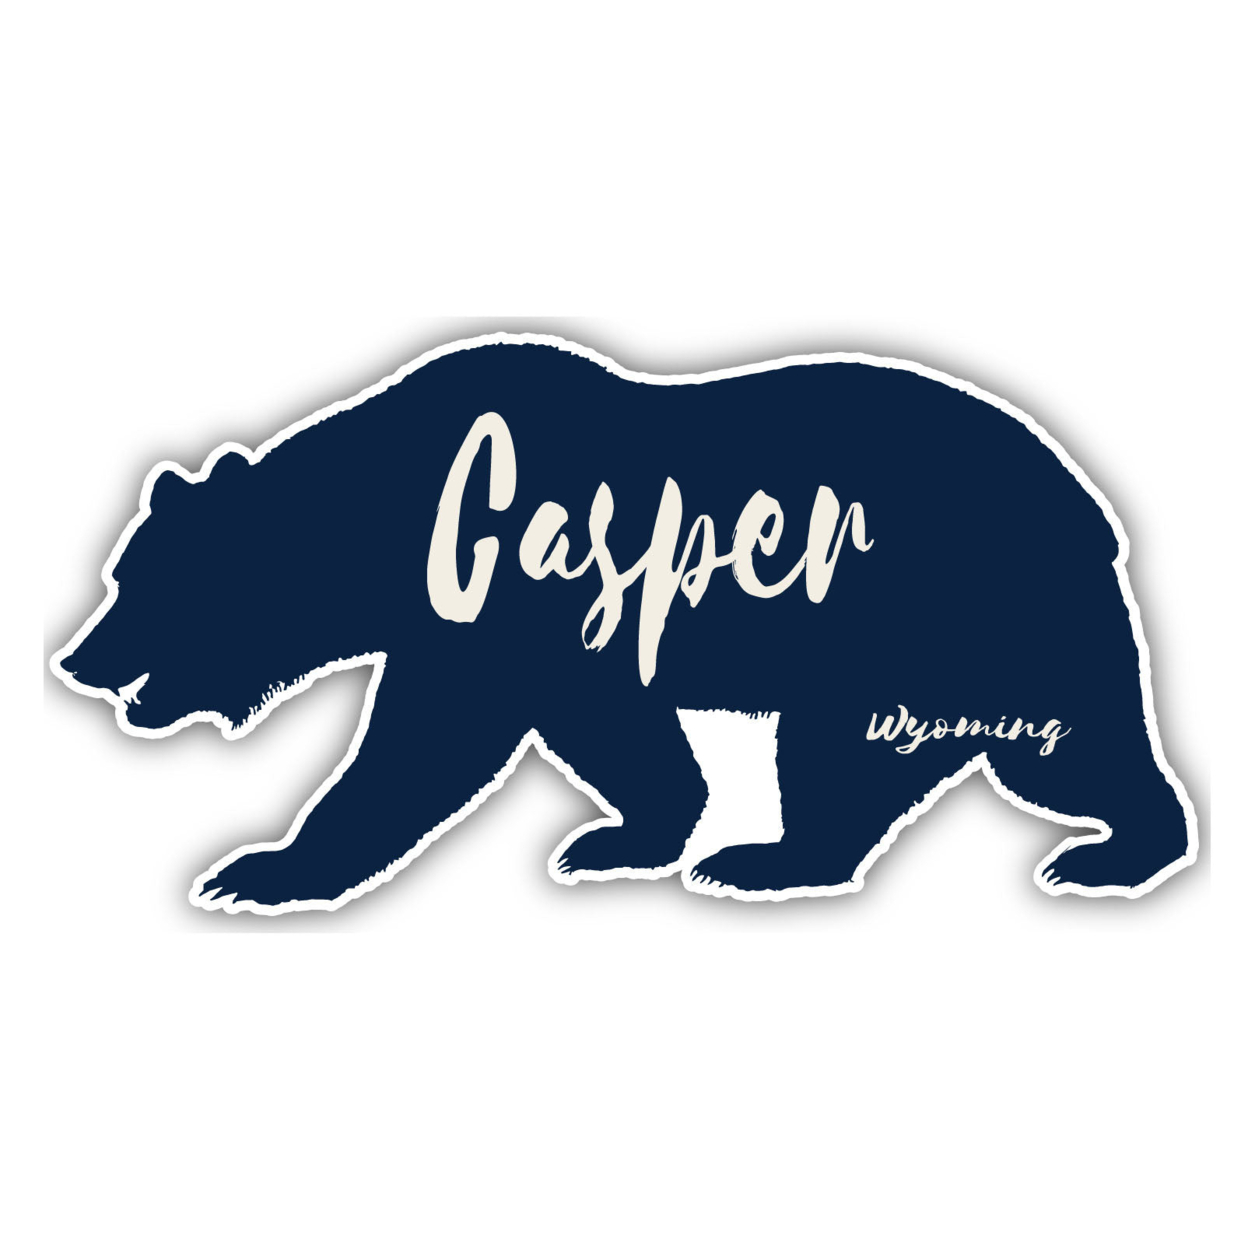 Casper Wyoming Souvenir Decorative Stickers (Choose Theme And Size) - Single Unit, 6-Inch, Tent